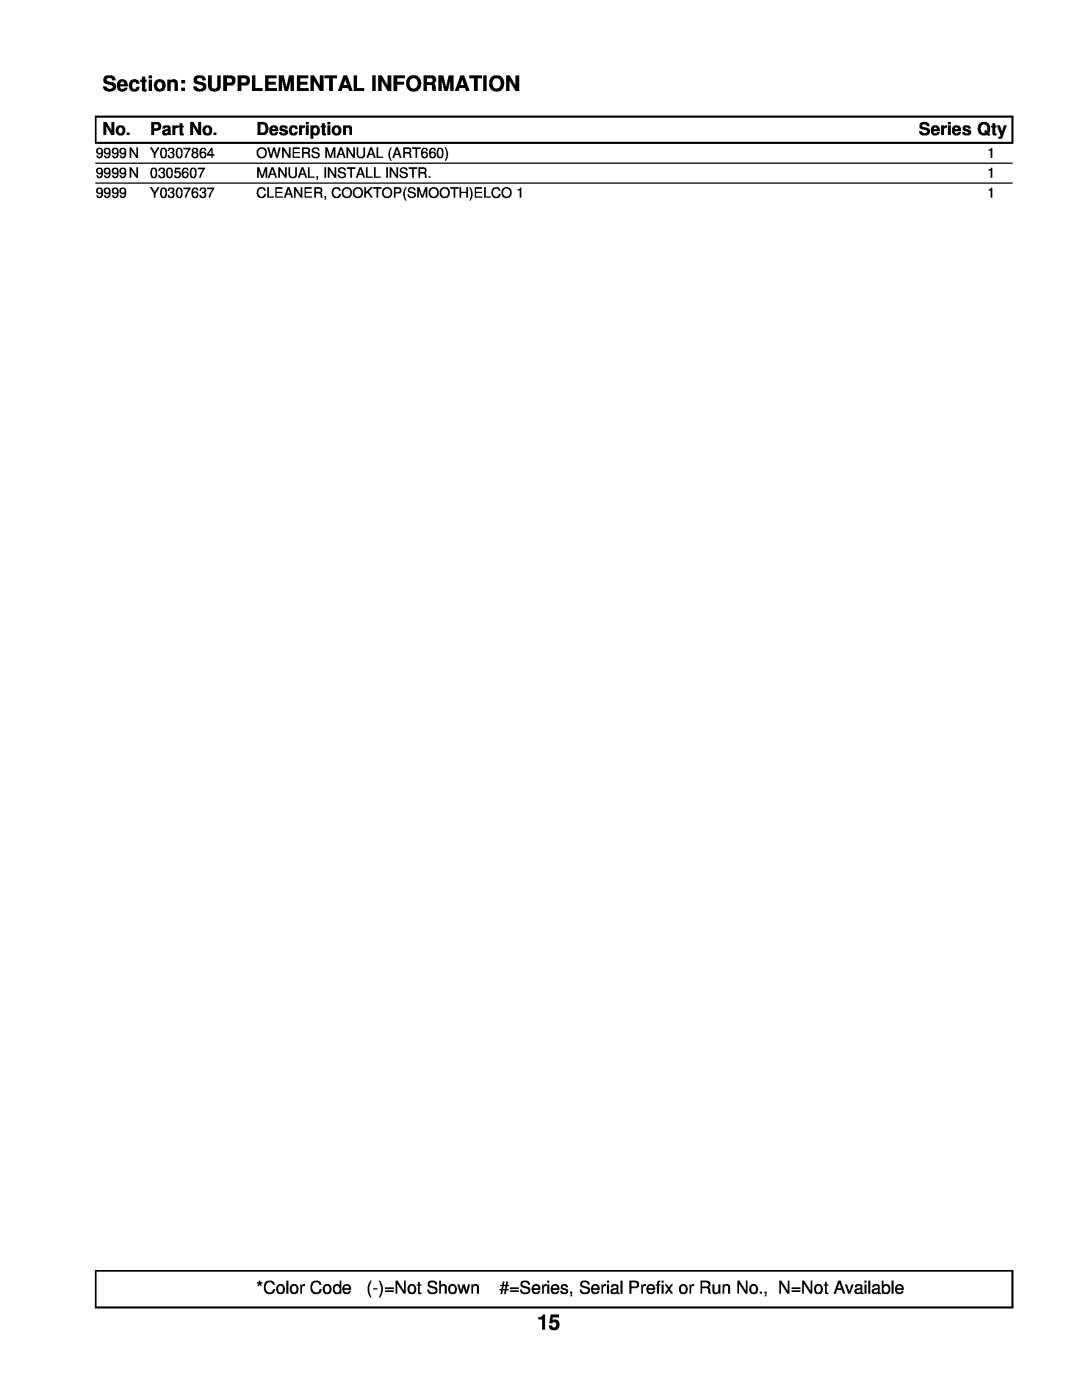 Whirlpool ART660L manual Section SUPPLEMENTAL INFORMATION, Description, Series Qty 